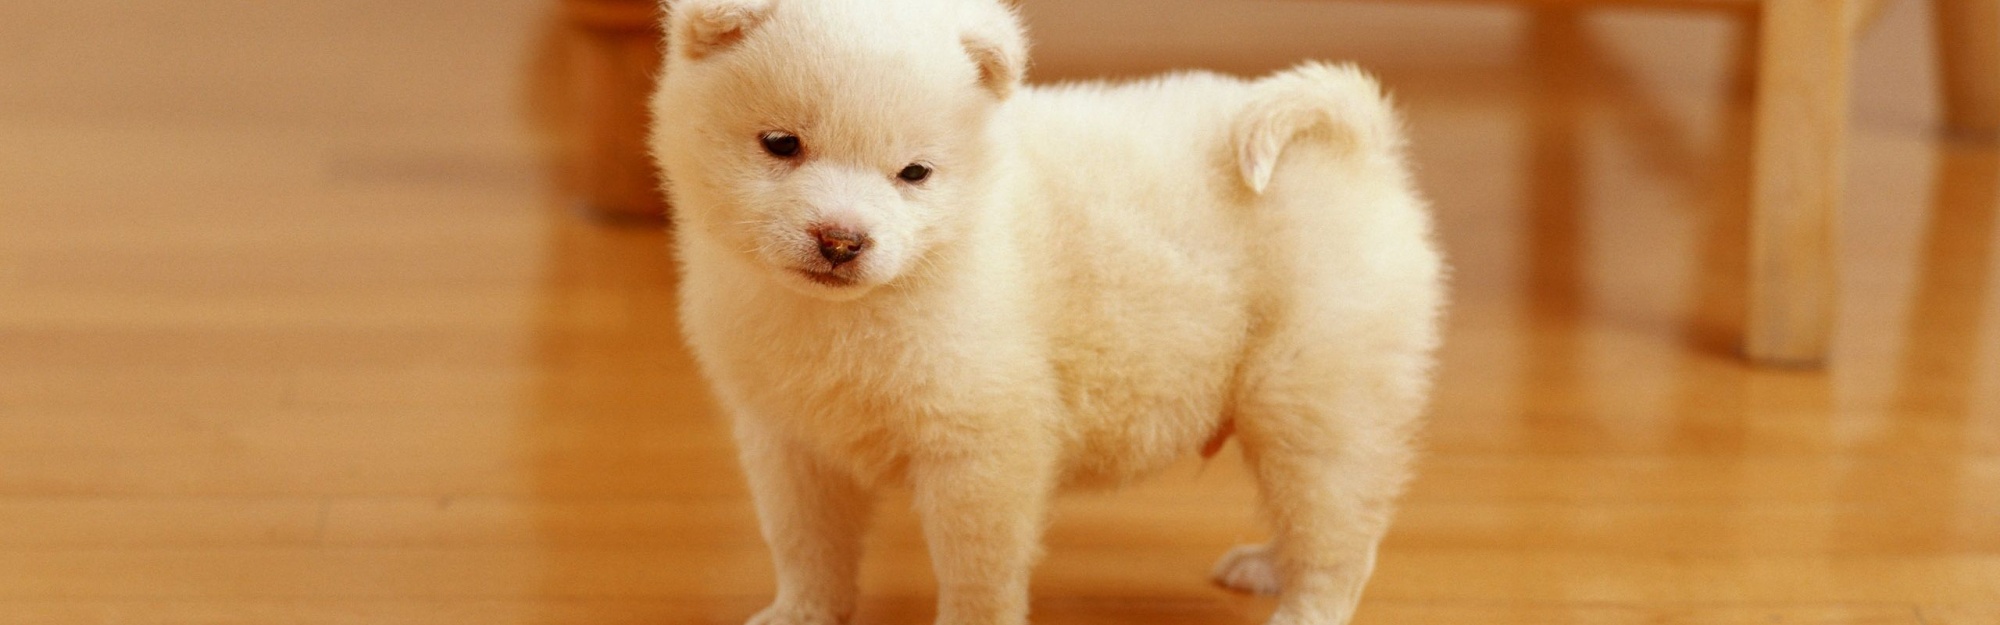 Cutest Puppy